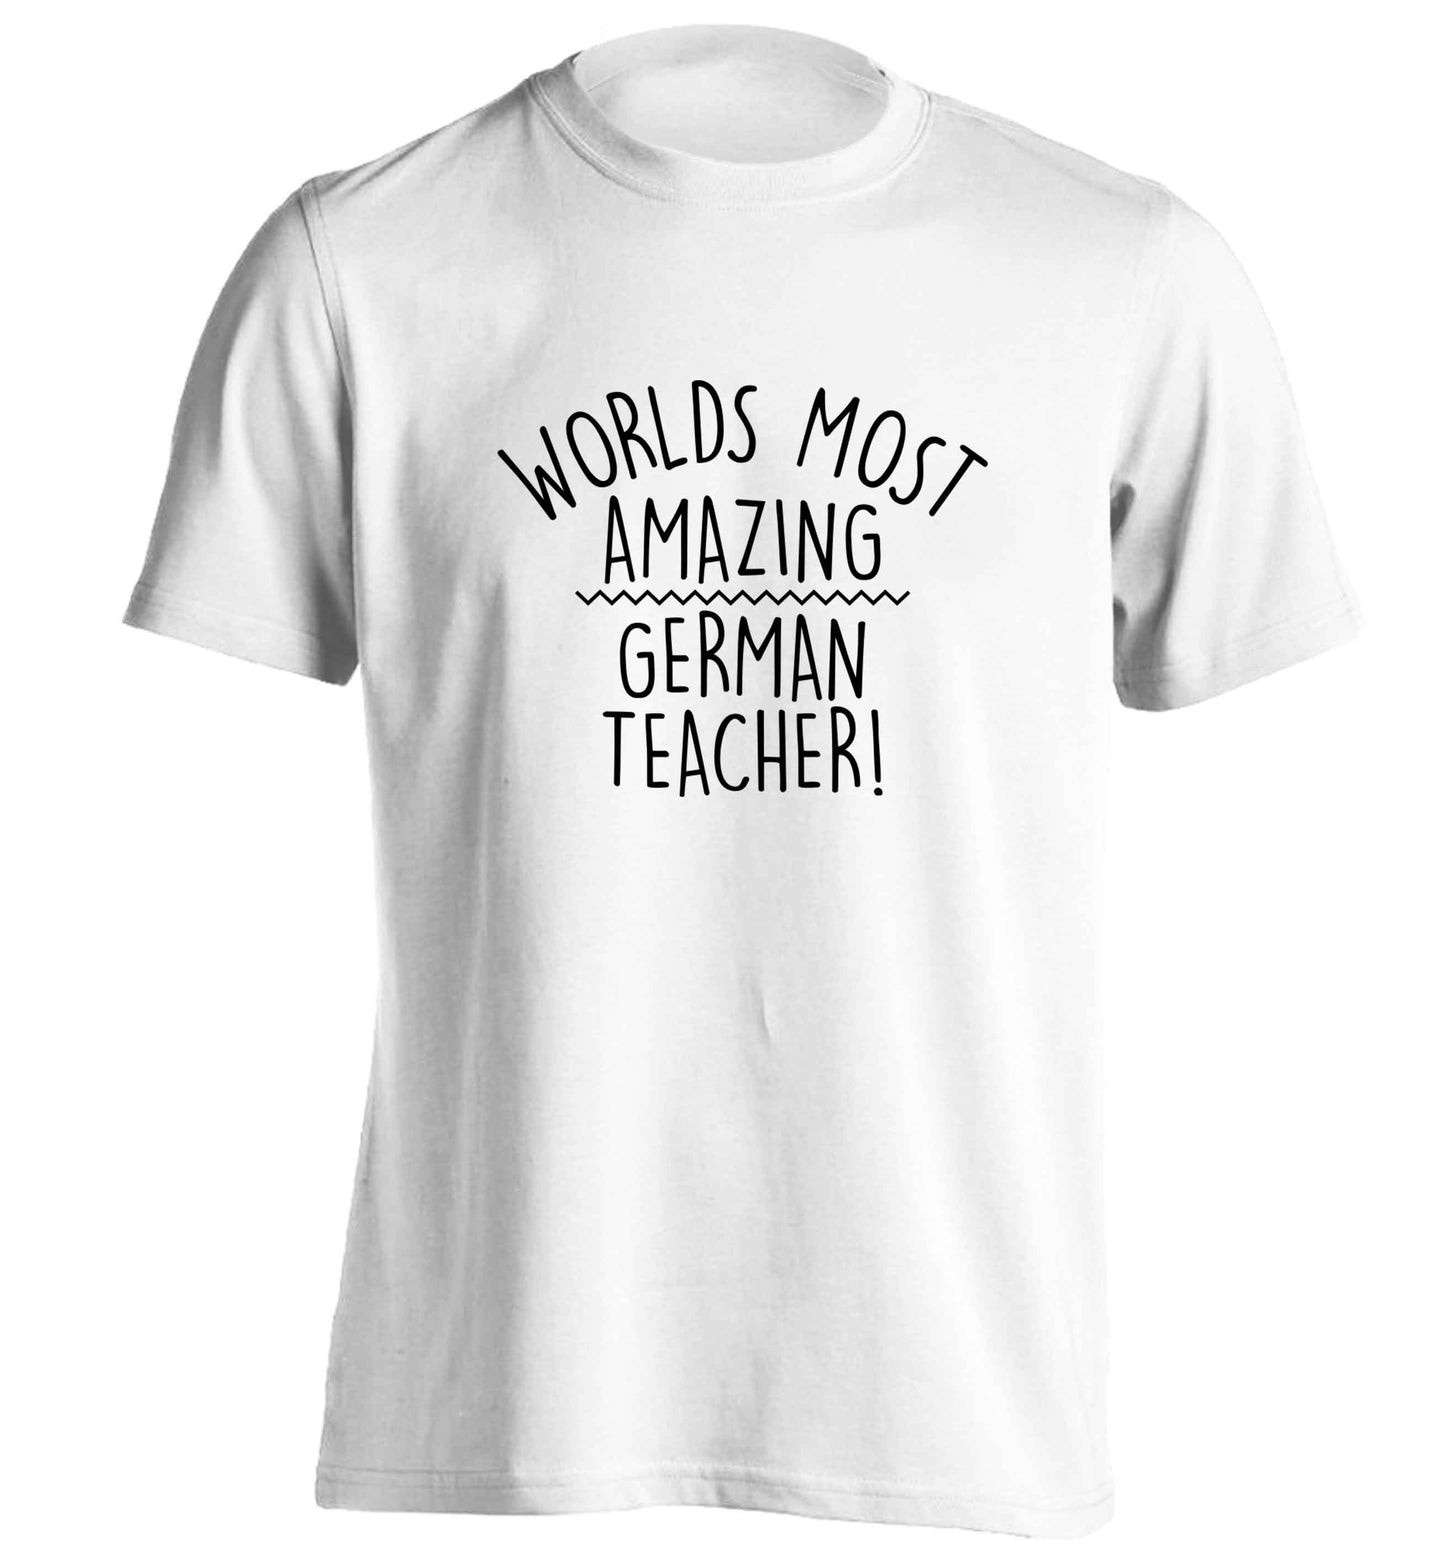 Worlds most amazing German teacher adults unisex white Tshirt 2XL